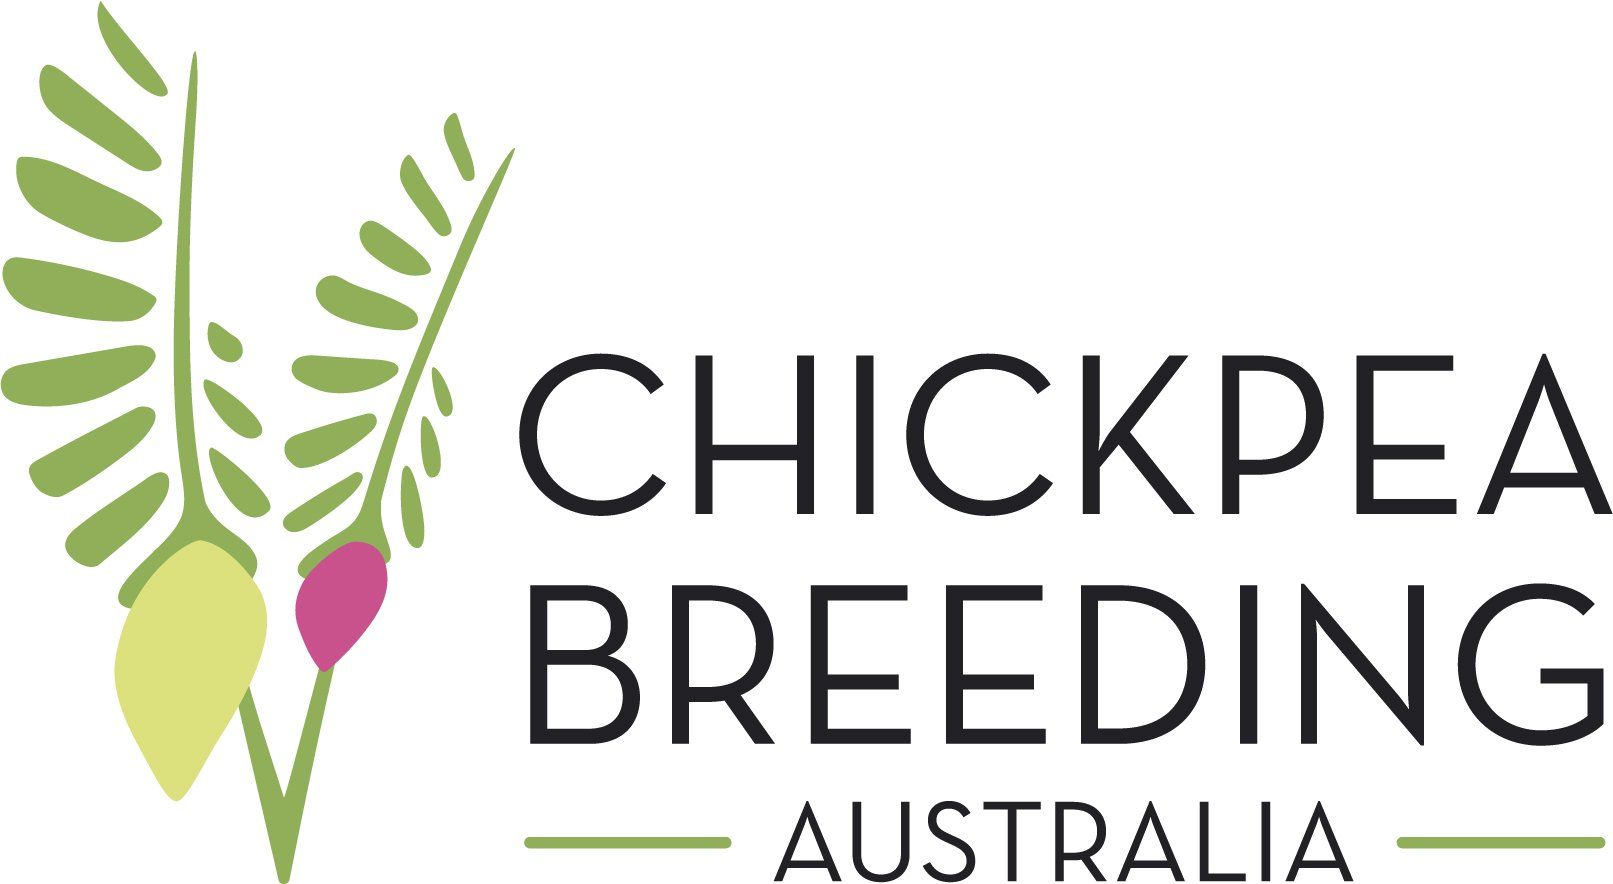 Chickpea Breeding Australia Run a Chickpea Management Program in Tamworth